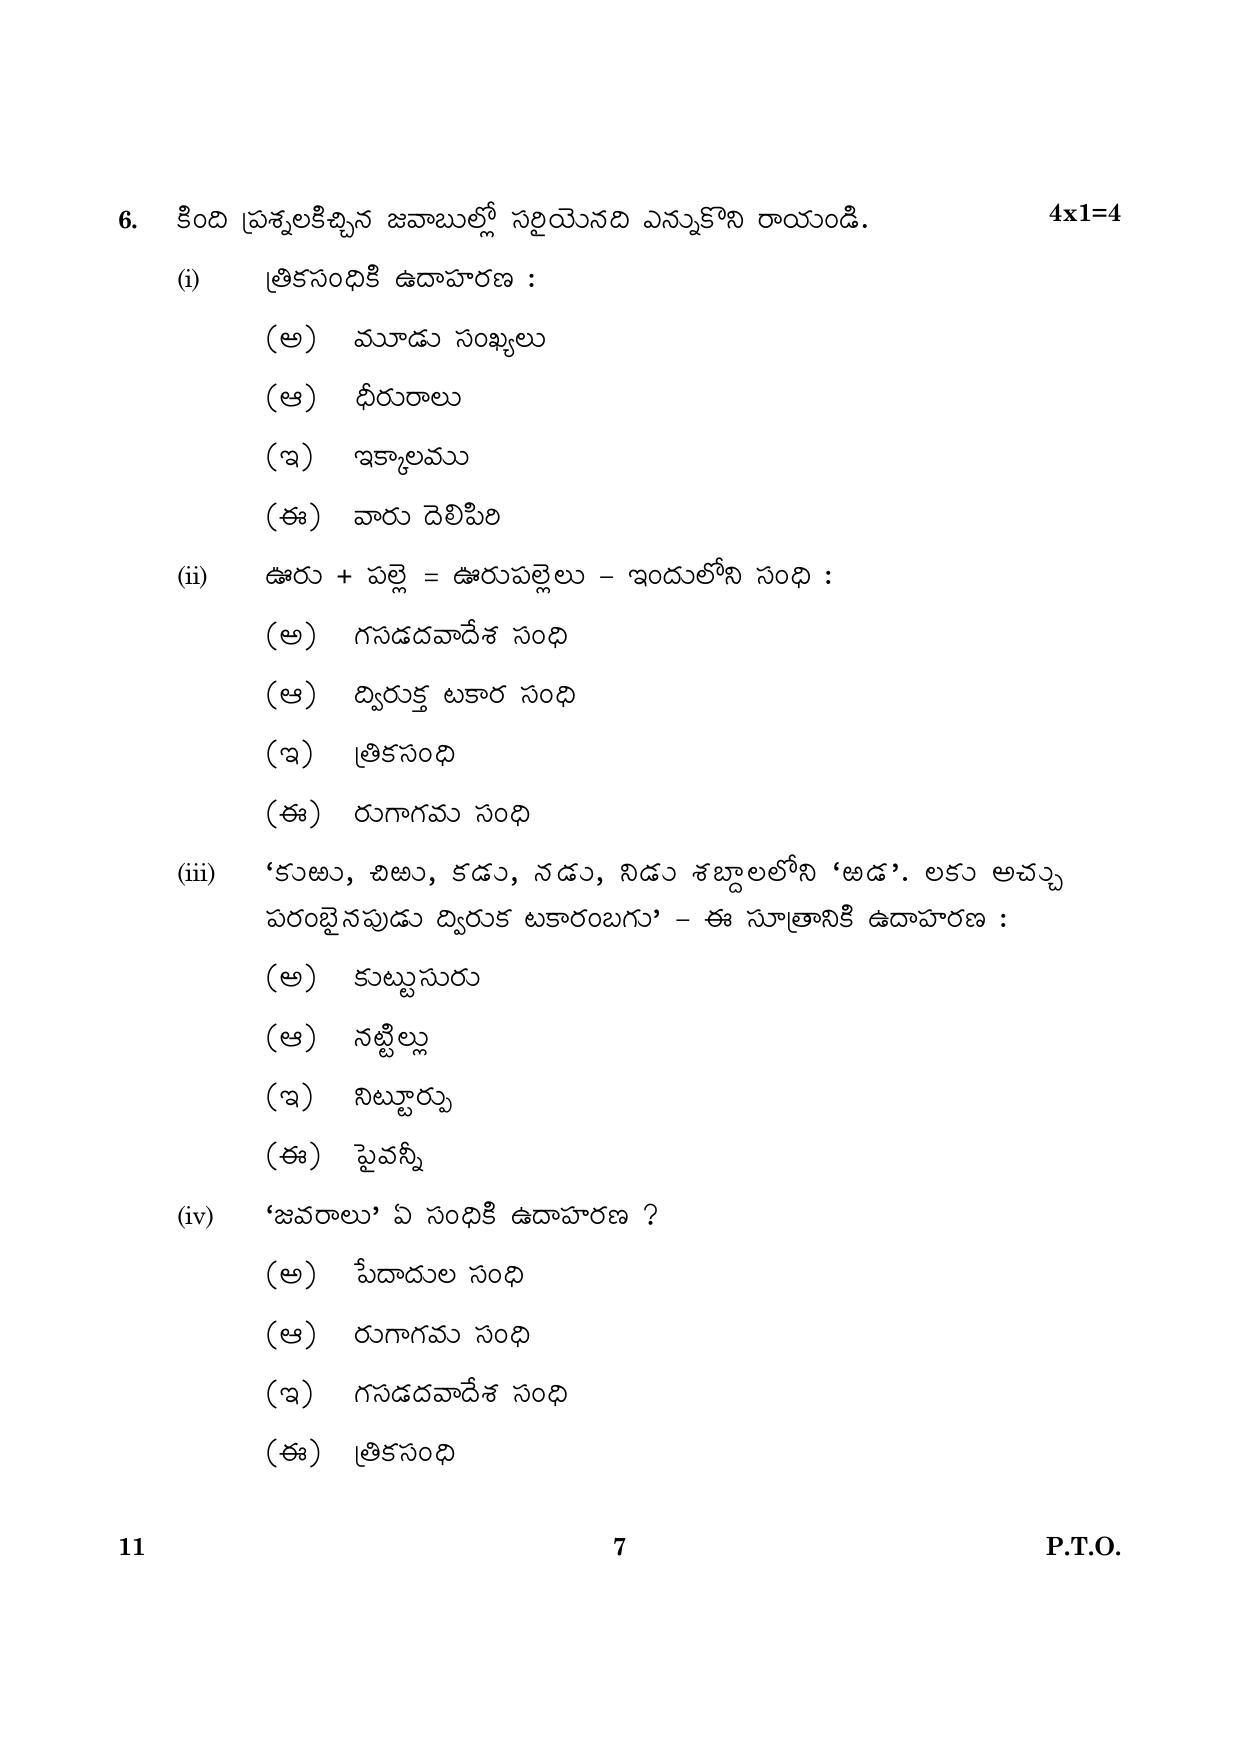 CBSE Class 10 011 Telugu 2016 Question Paper - Page 7